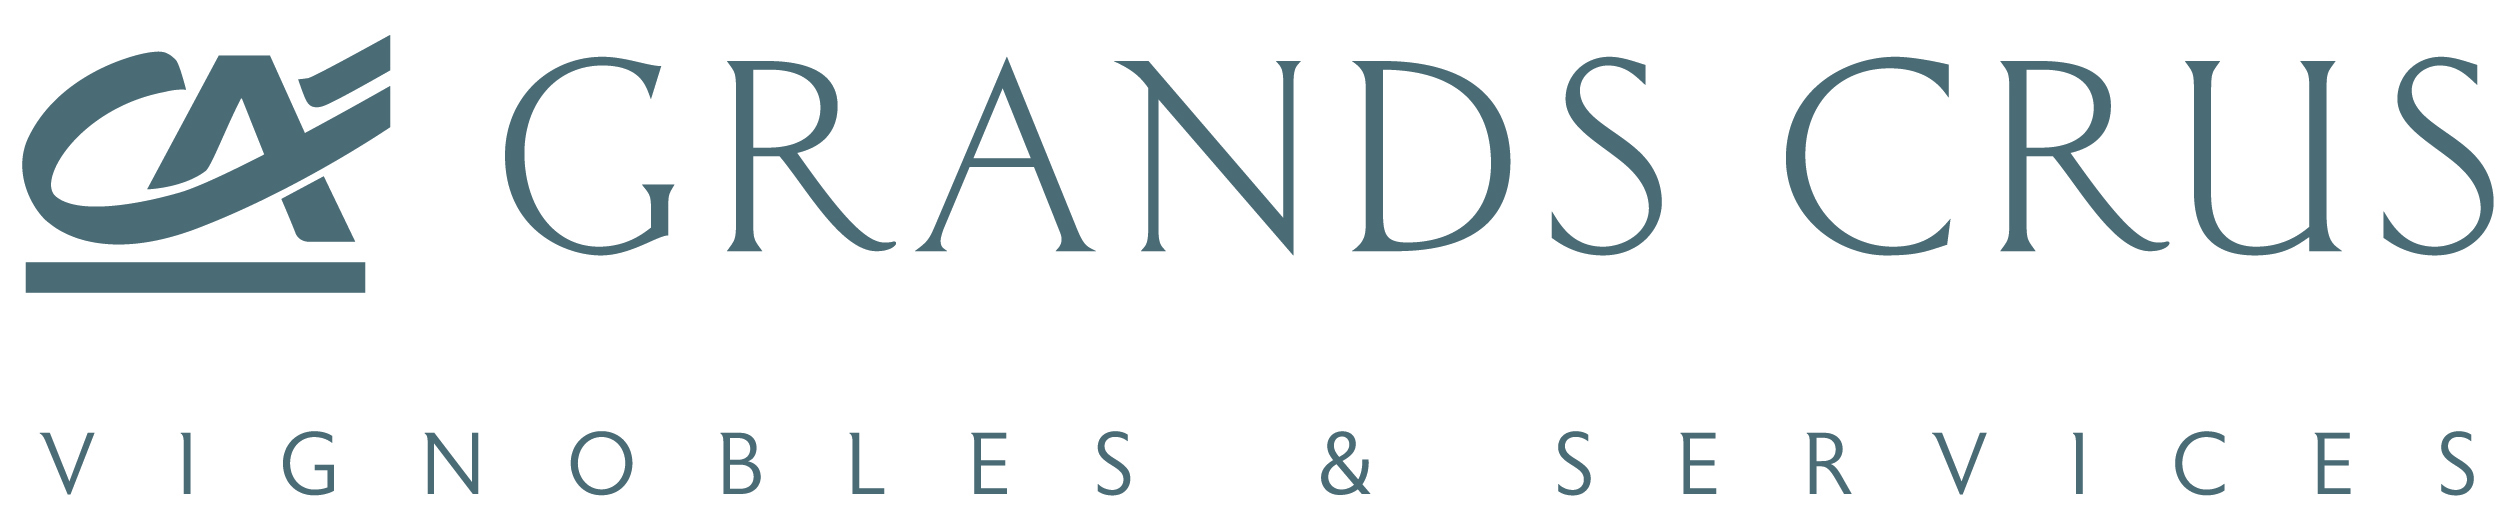 CA Grands Crus_logo